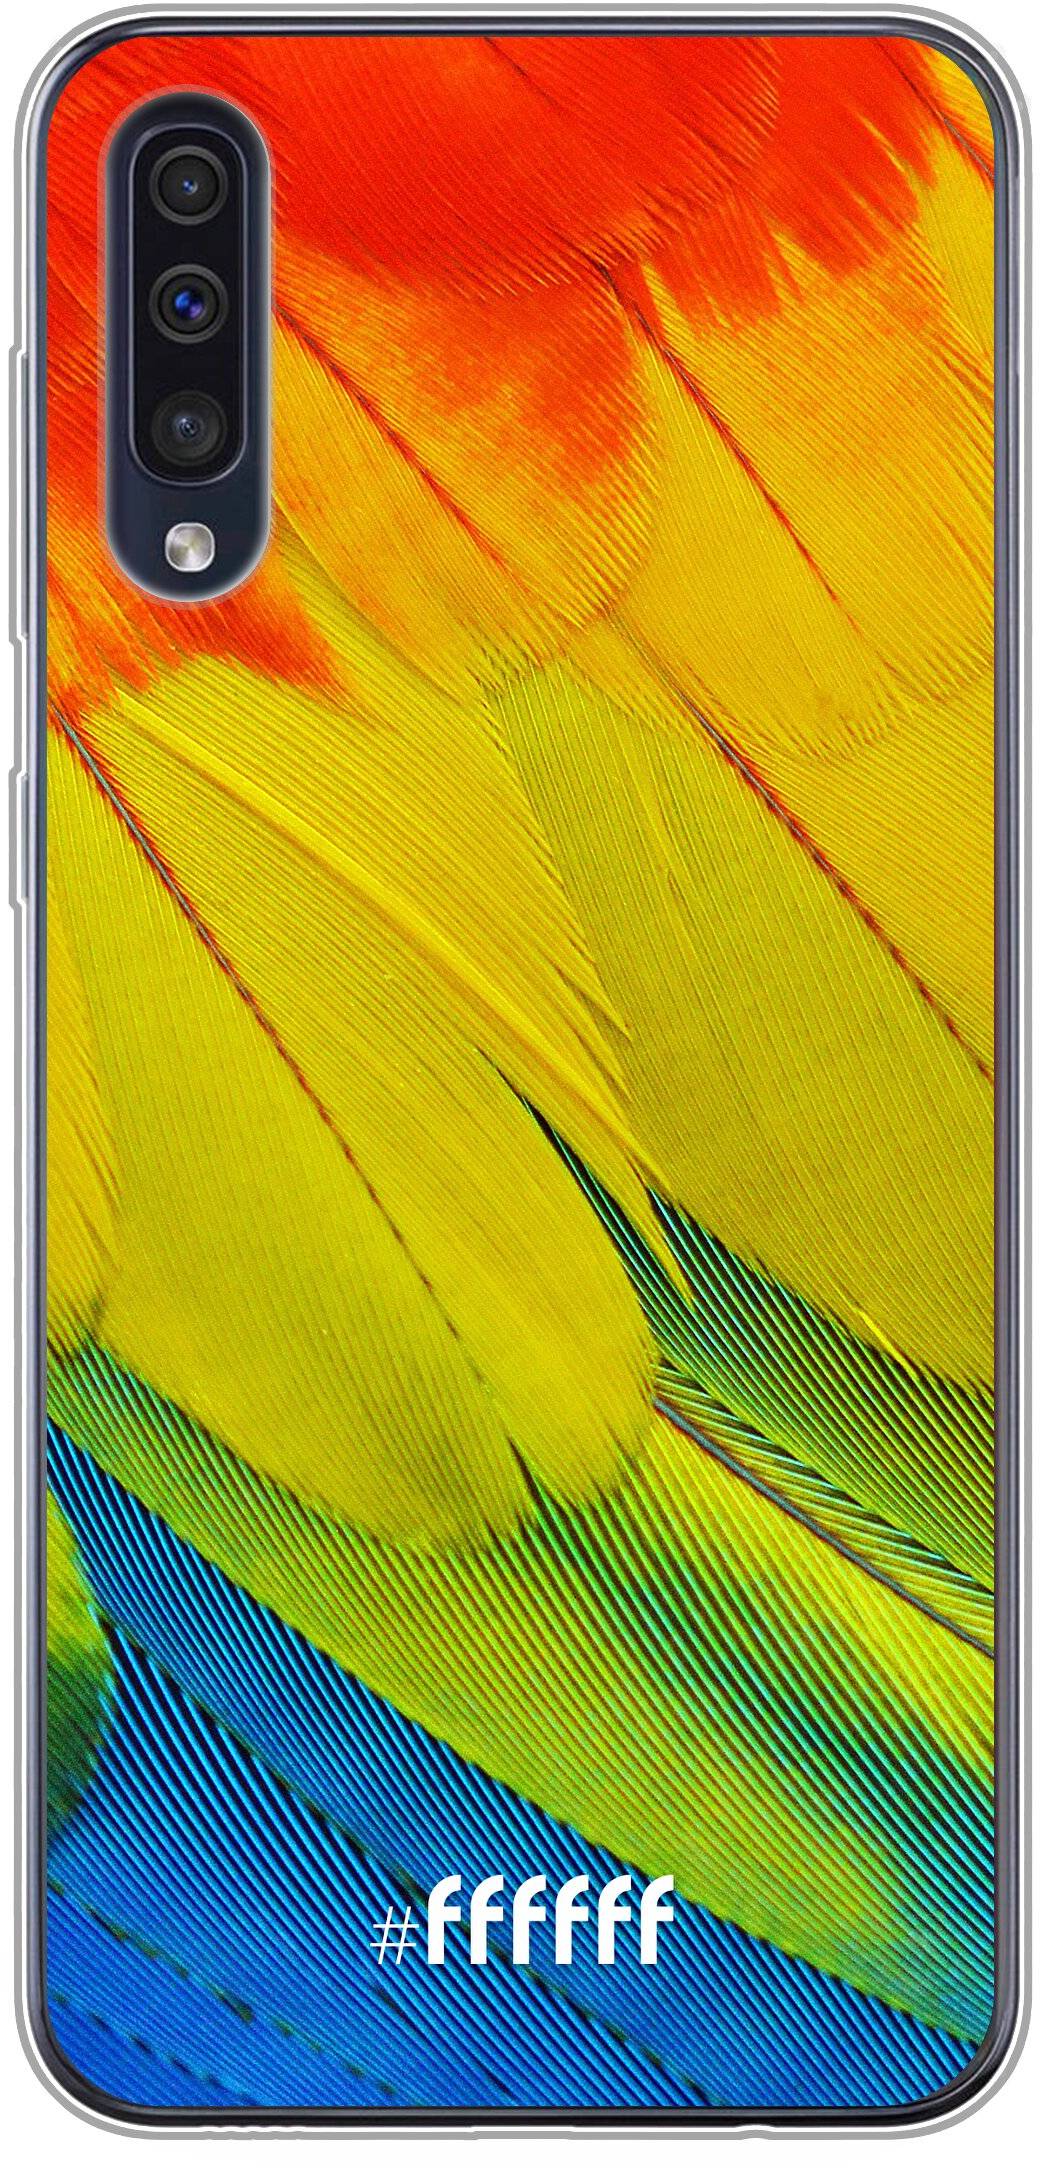 Macaw Hues Galaxy A50